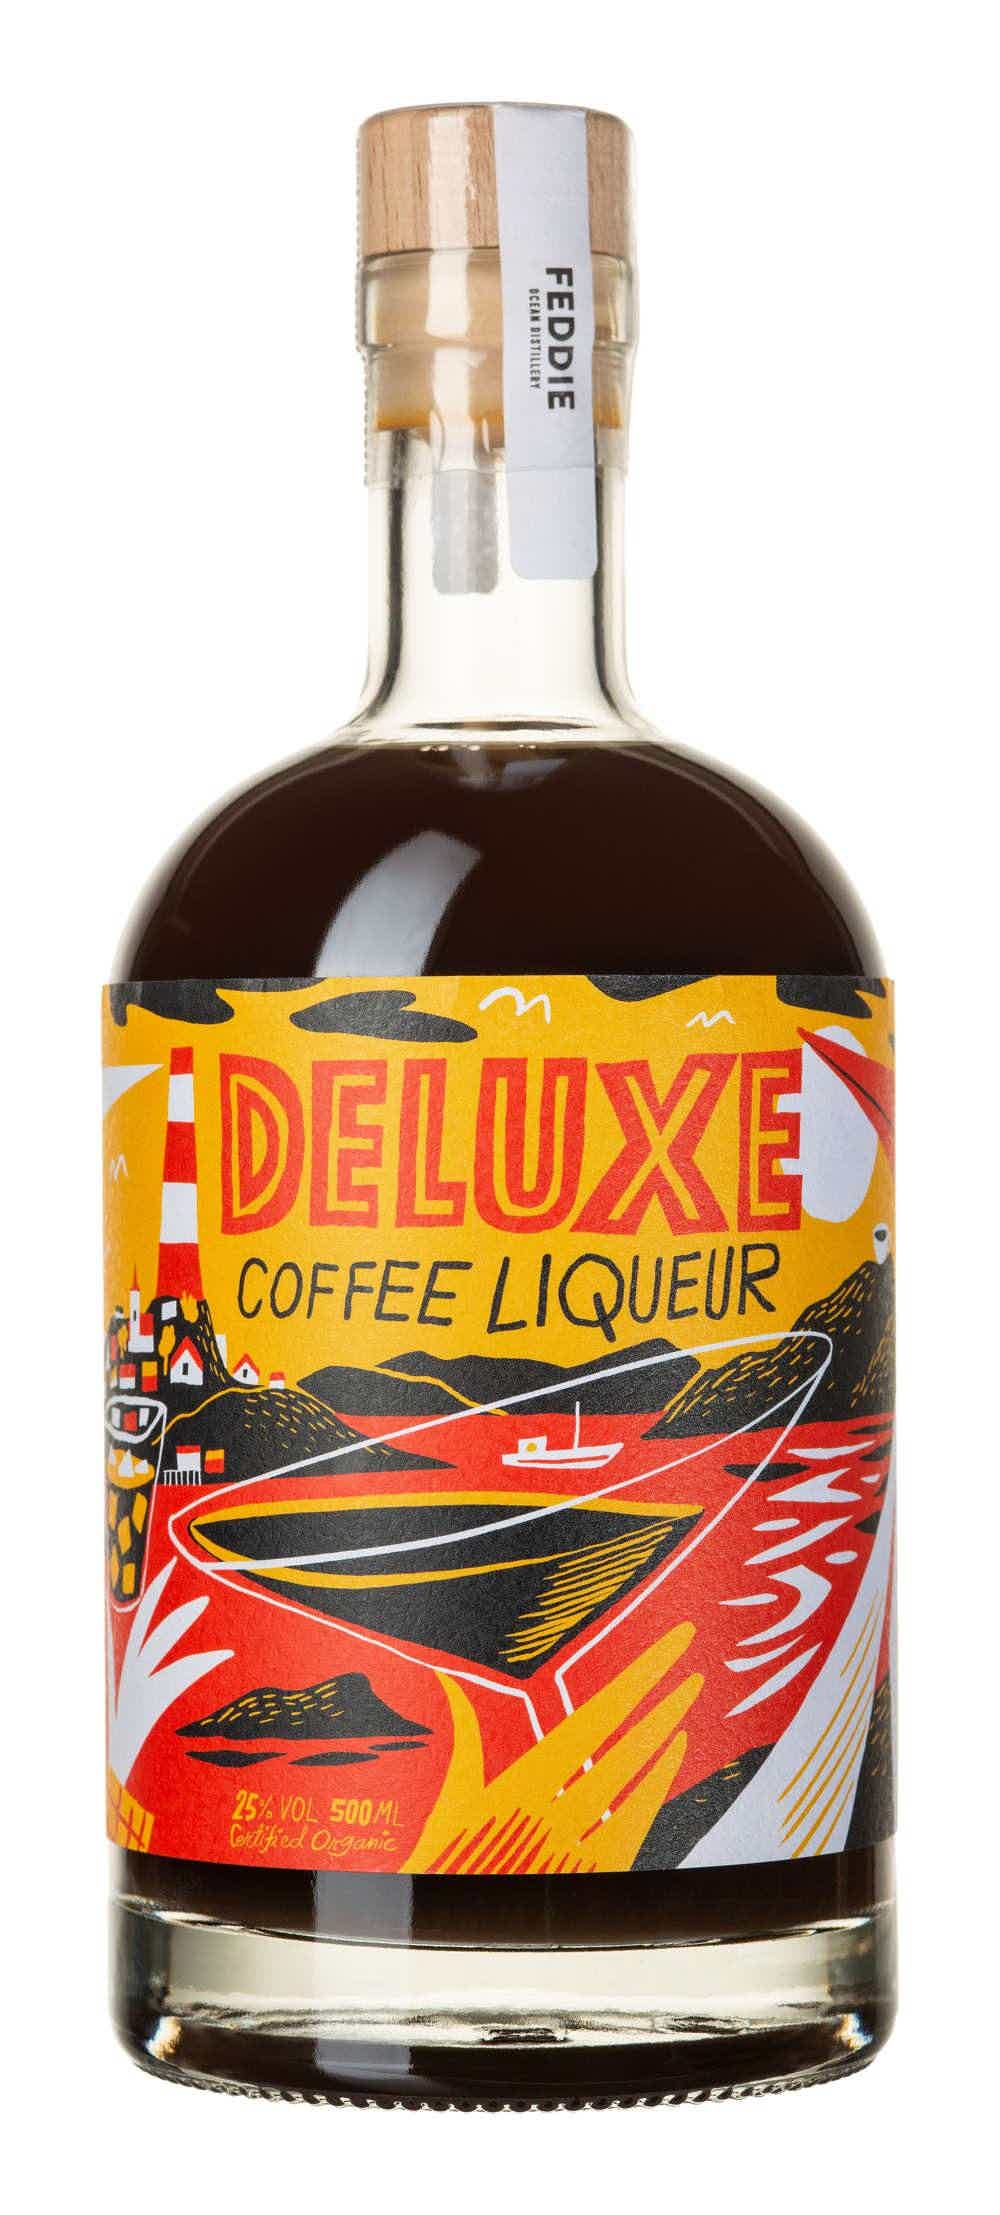 Deluxe Coffee Liqueur 25.0% 0.5L, Spirits